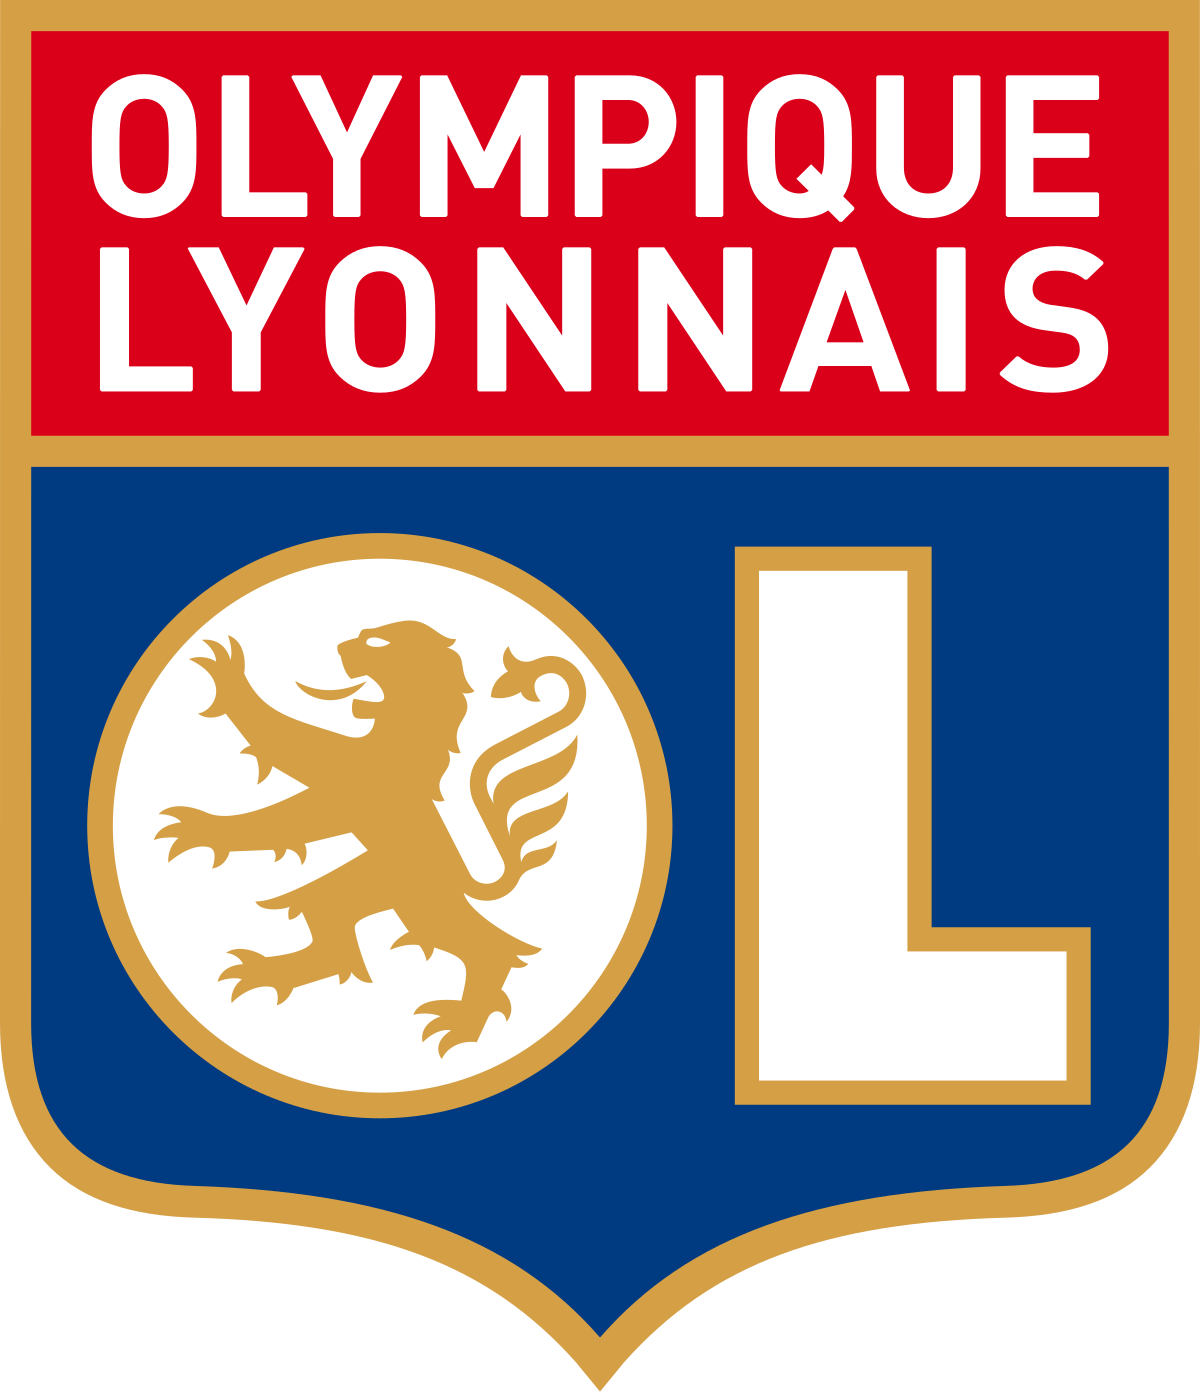 Olympique Lyonnais - Wikipedia bahasa Indonesia, ensiklopedia bebas